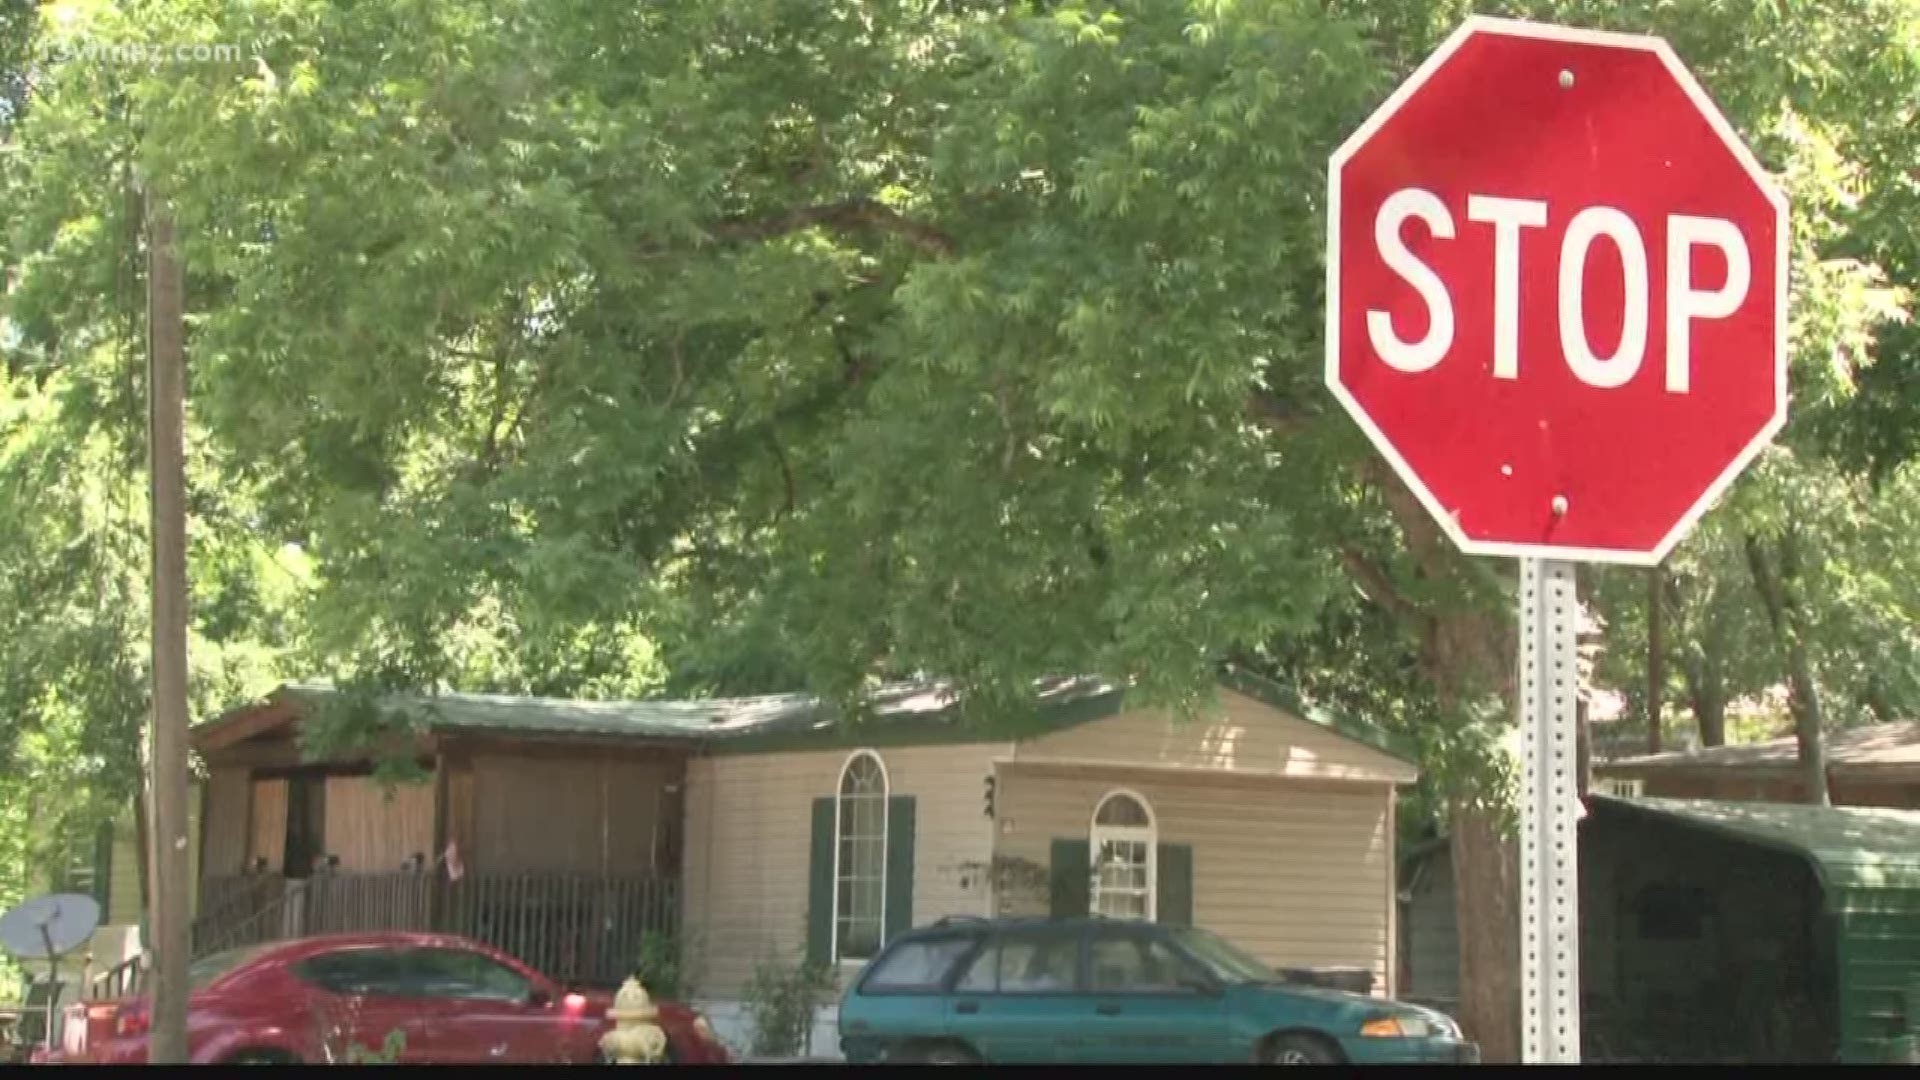 4 shootings target same home in Baldwin County